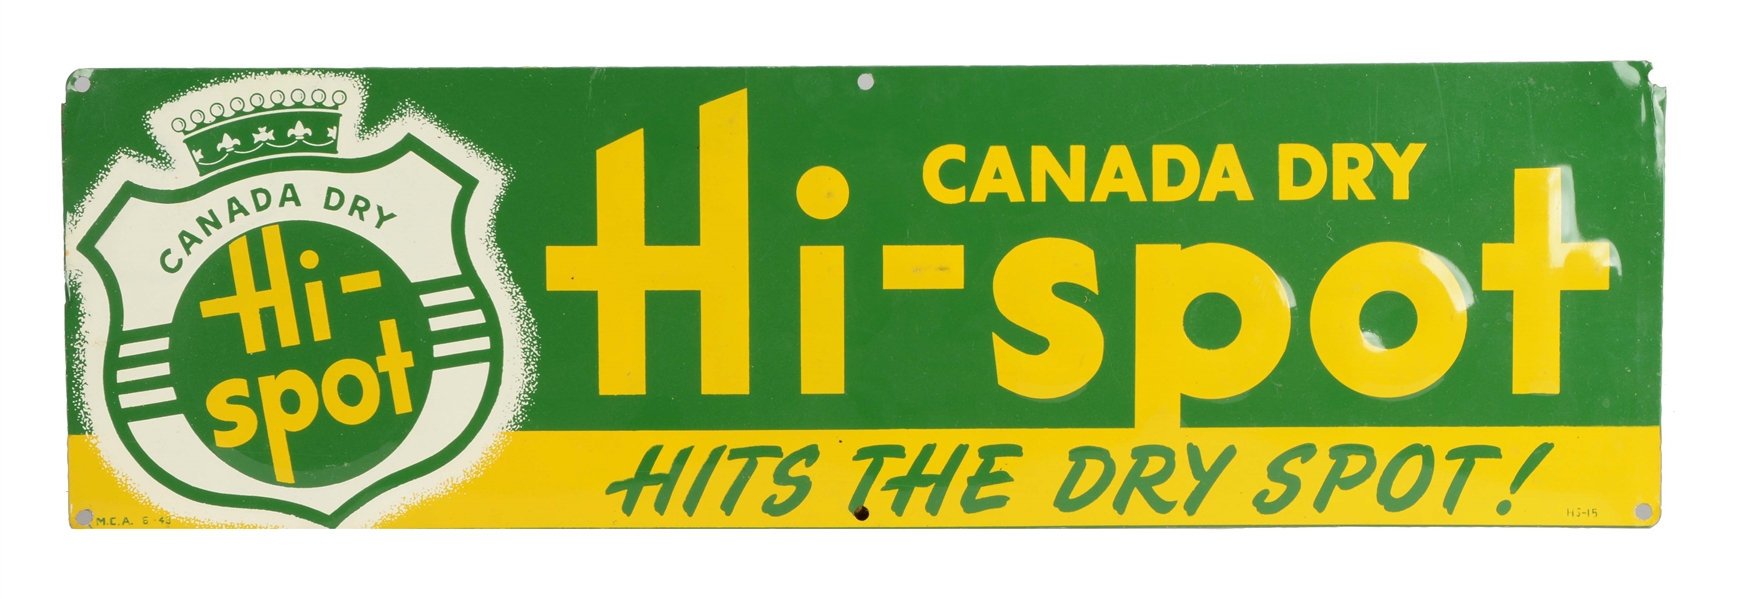 CANADA DRY HI-SPOT ADVETISING SIGN.